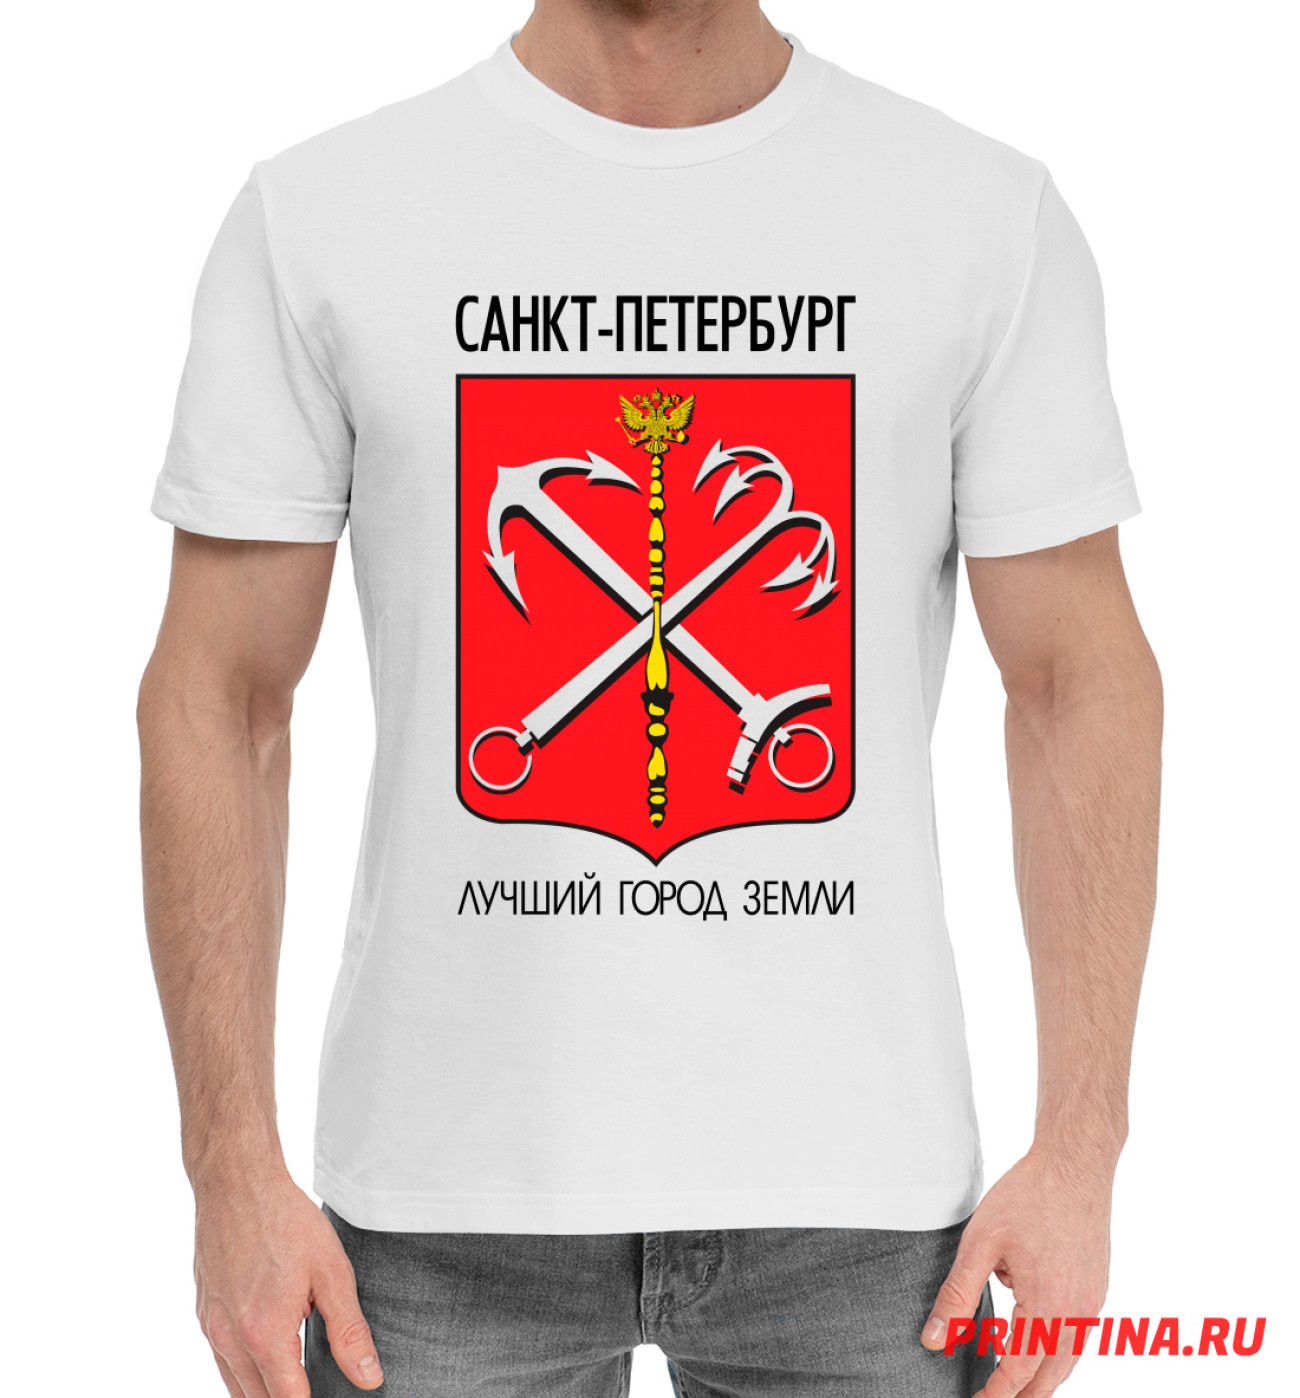 Мужская Хлопковая футболка Санкт - Петербург, артикул: GRD-501329-hfu-2